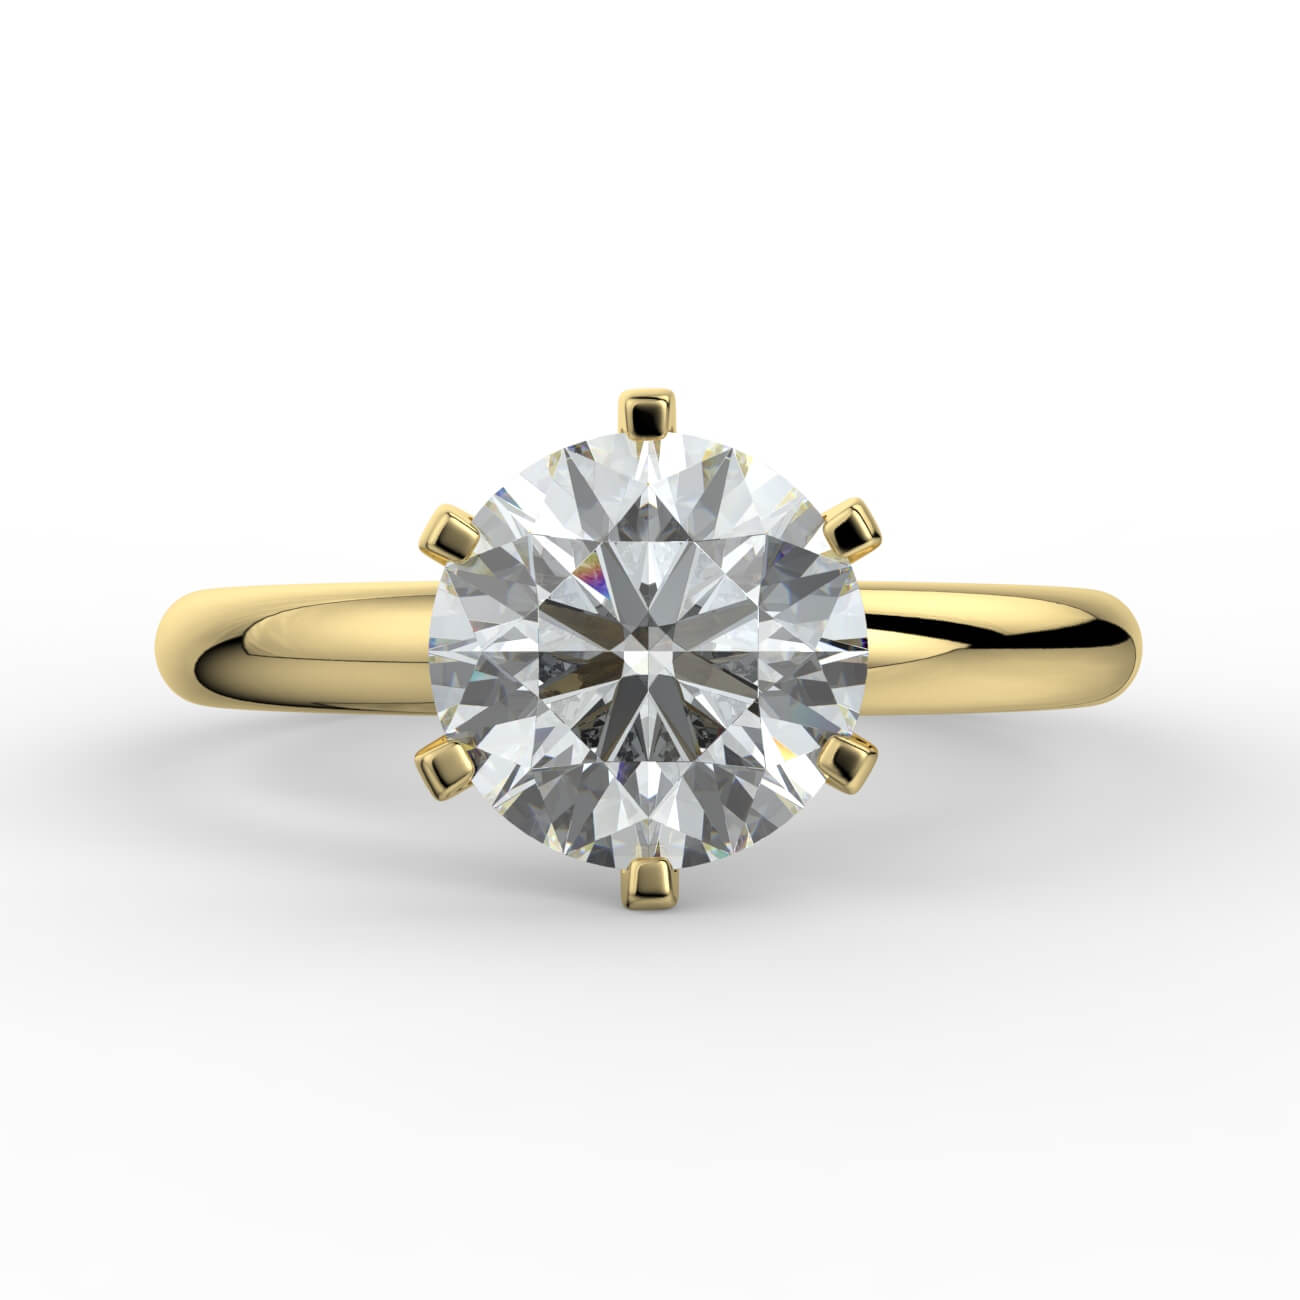 Solitaire diamond engagement ring in yellow gold – Australian Diamond Network